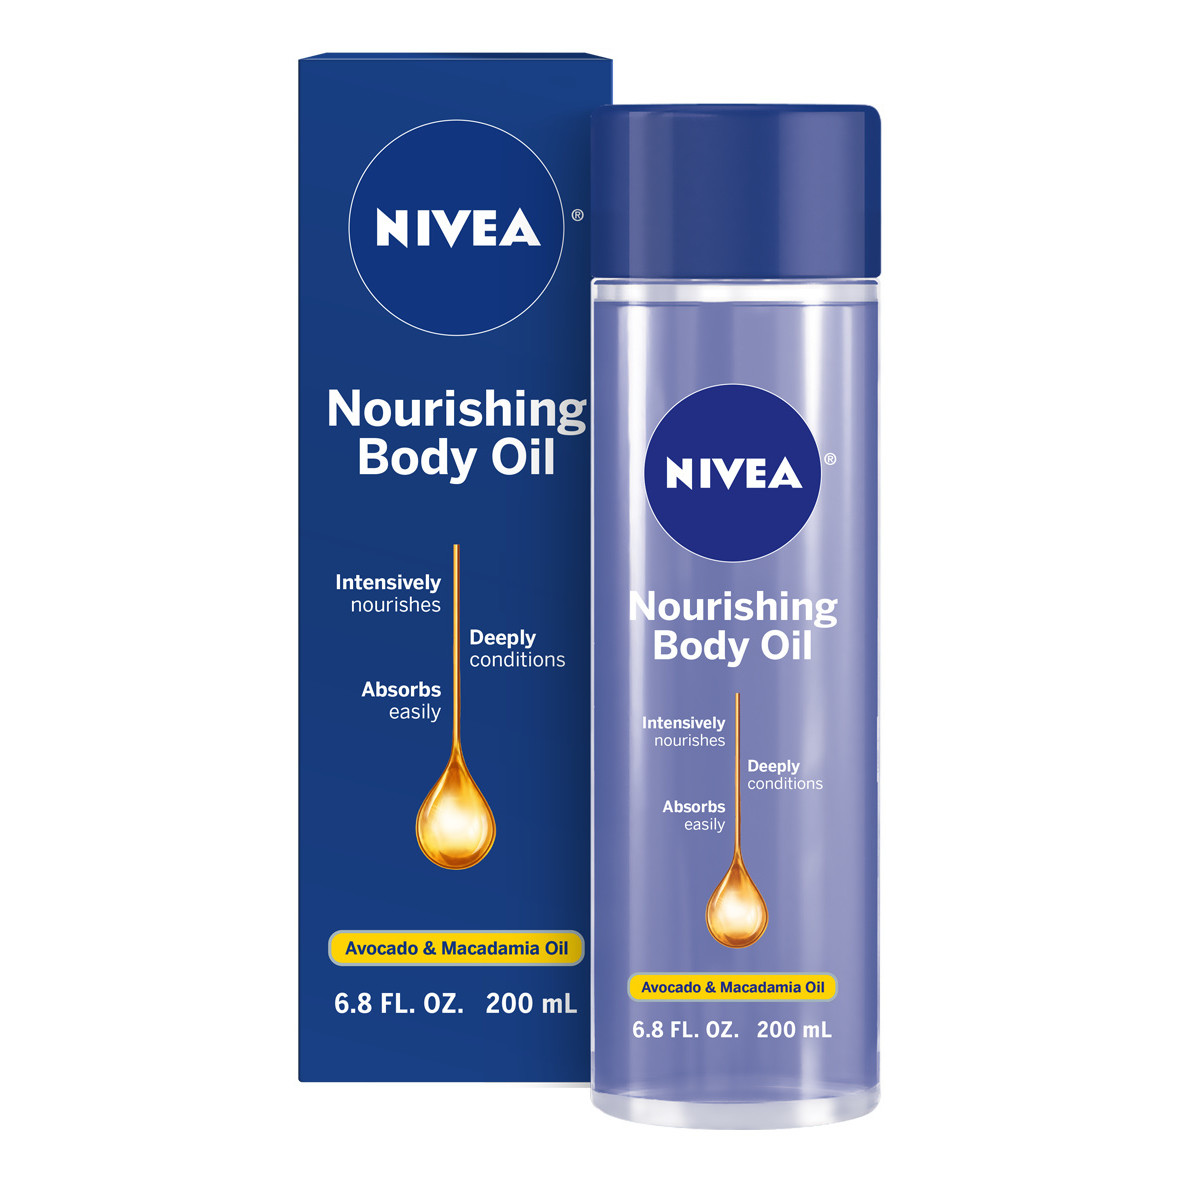 NIVEA Nourishing Body Oil 6.8 fl. oz. - image 1 of 4